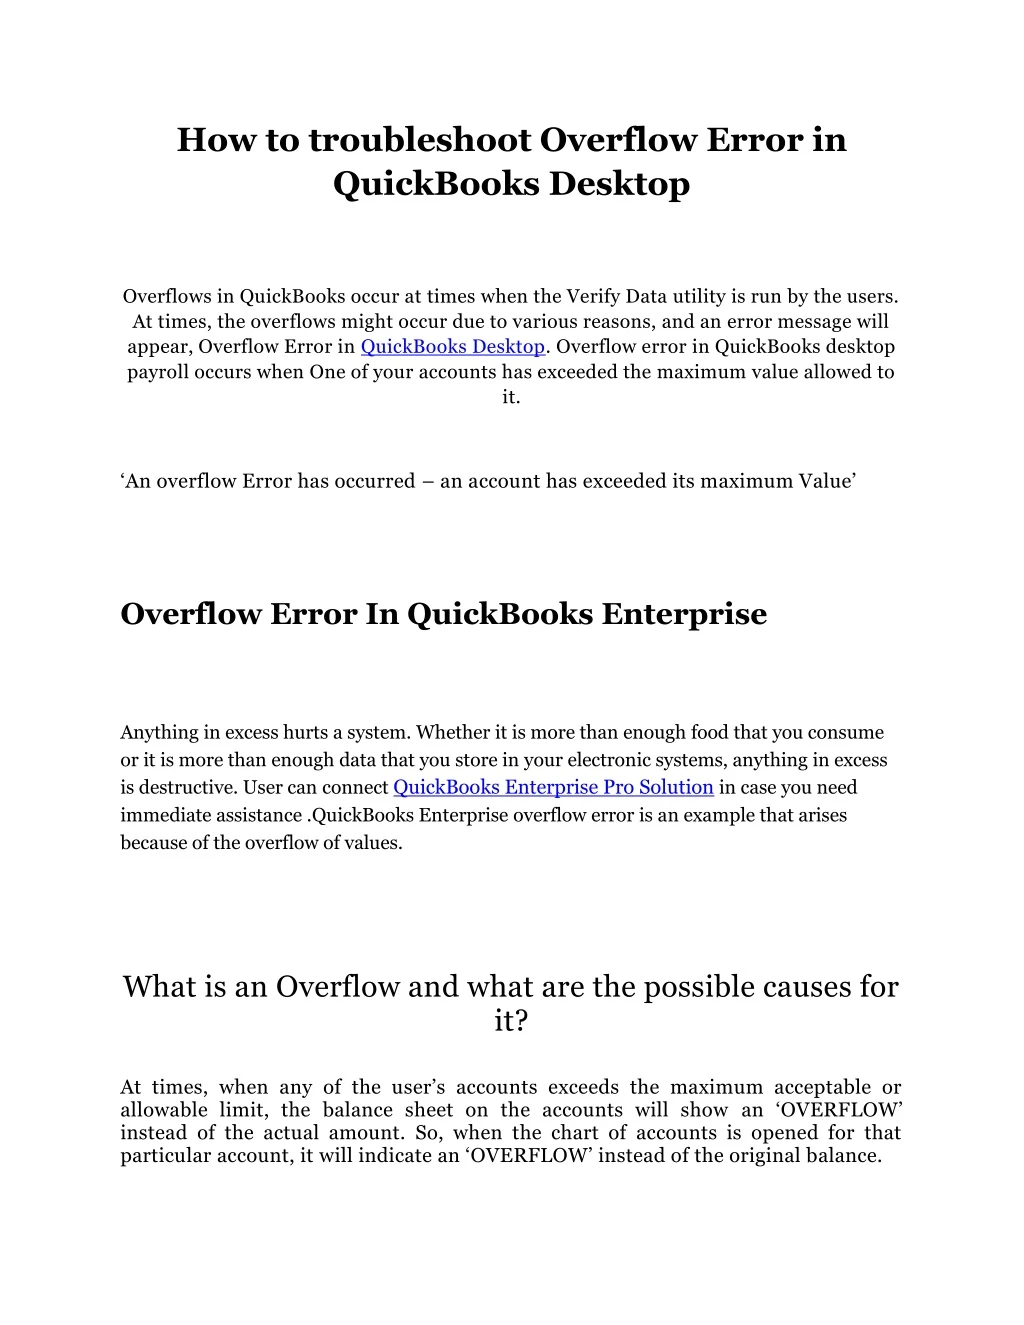 how to troubleshoot overflow error in quickbooks